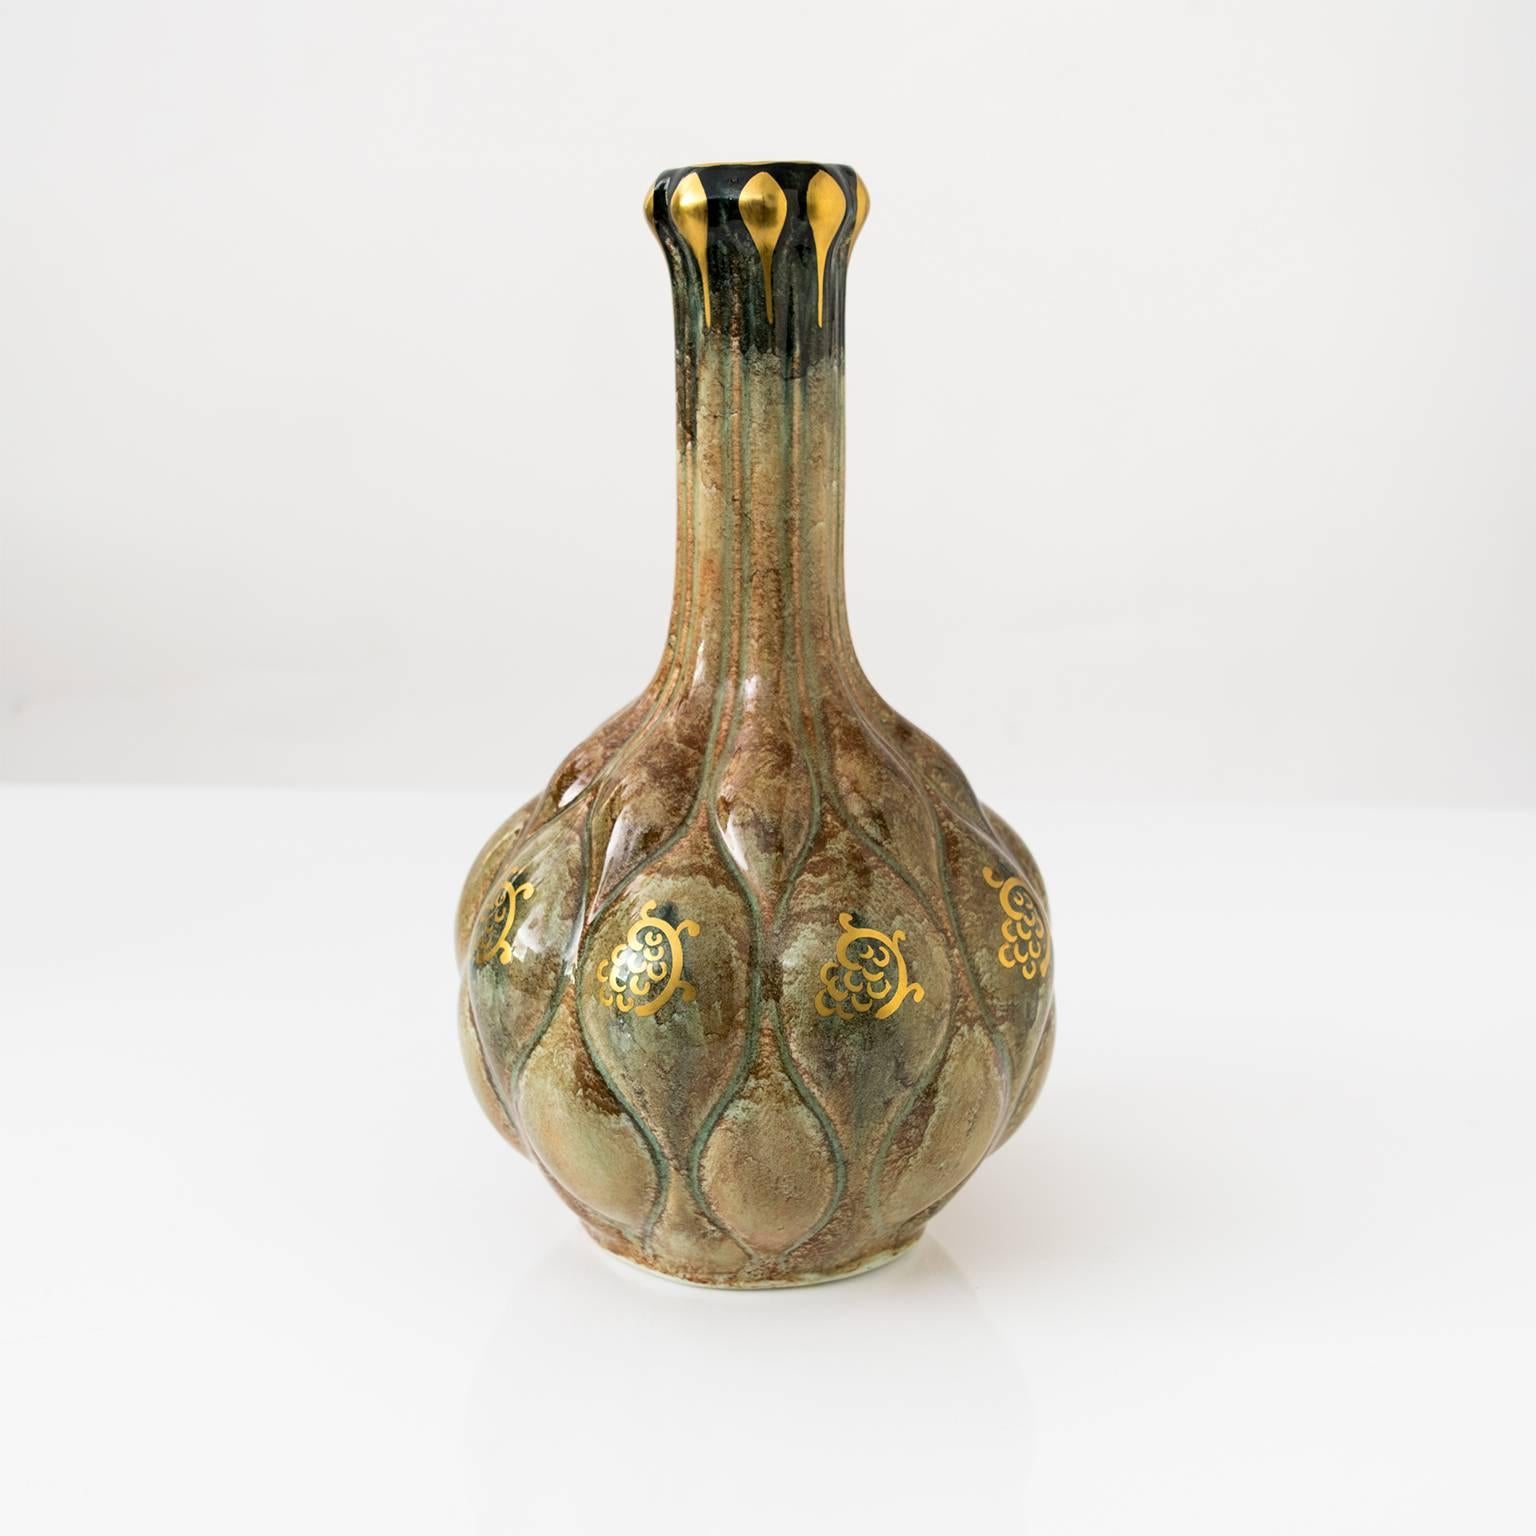 Scandinavian Modern Swedish Art Deco luster glazed bottle vase decorated with gold details, designed by Josef Ekberg for Gustavsberg, signed and dated 1931.

Measures: H. 10.25